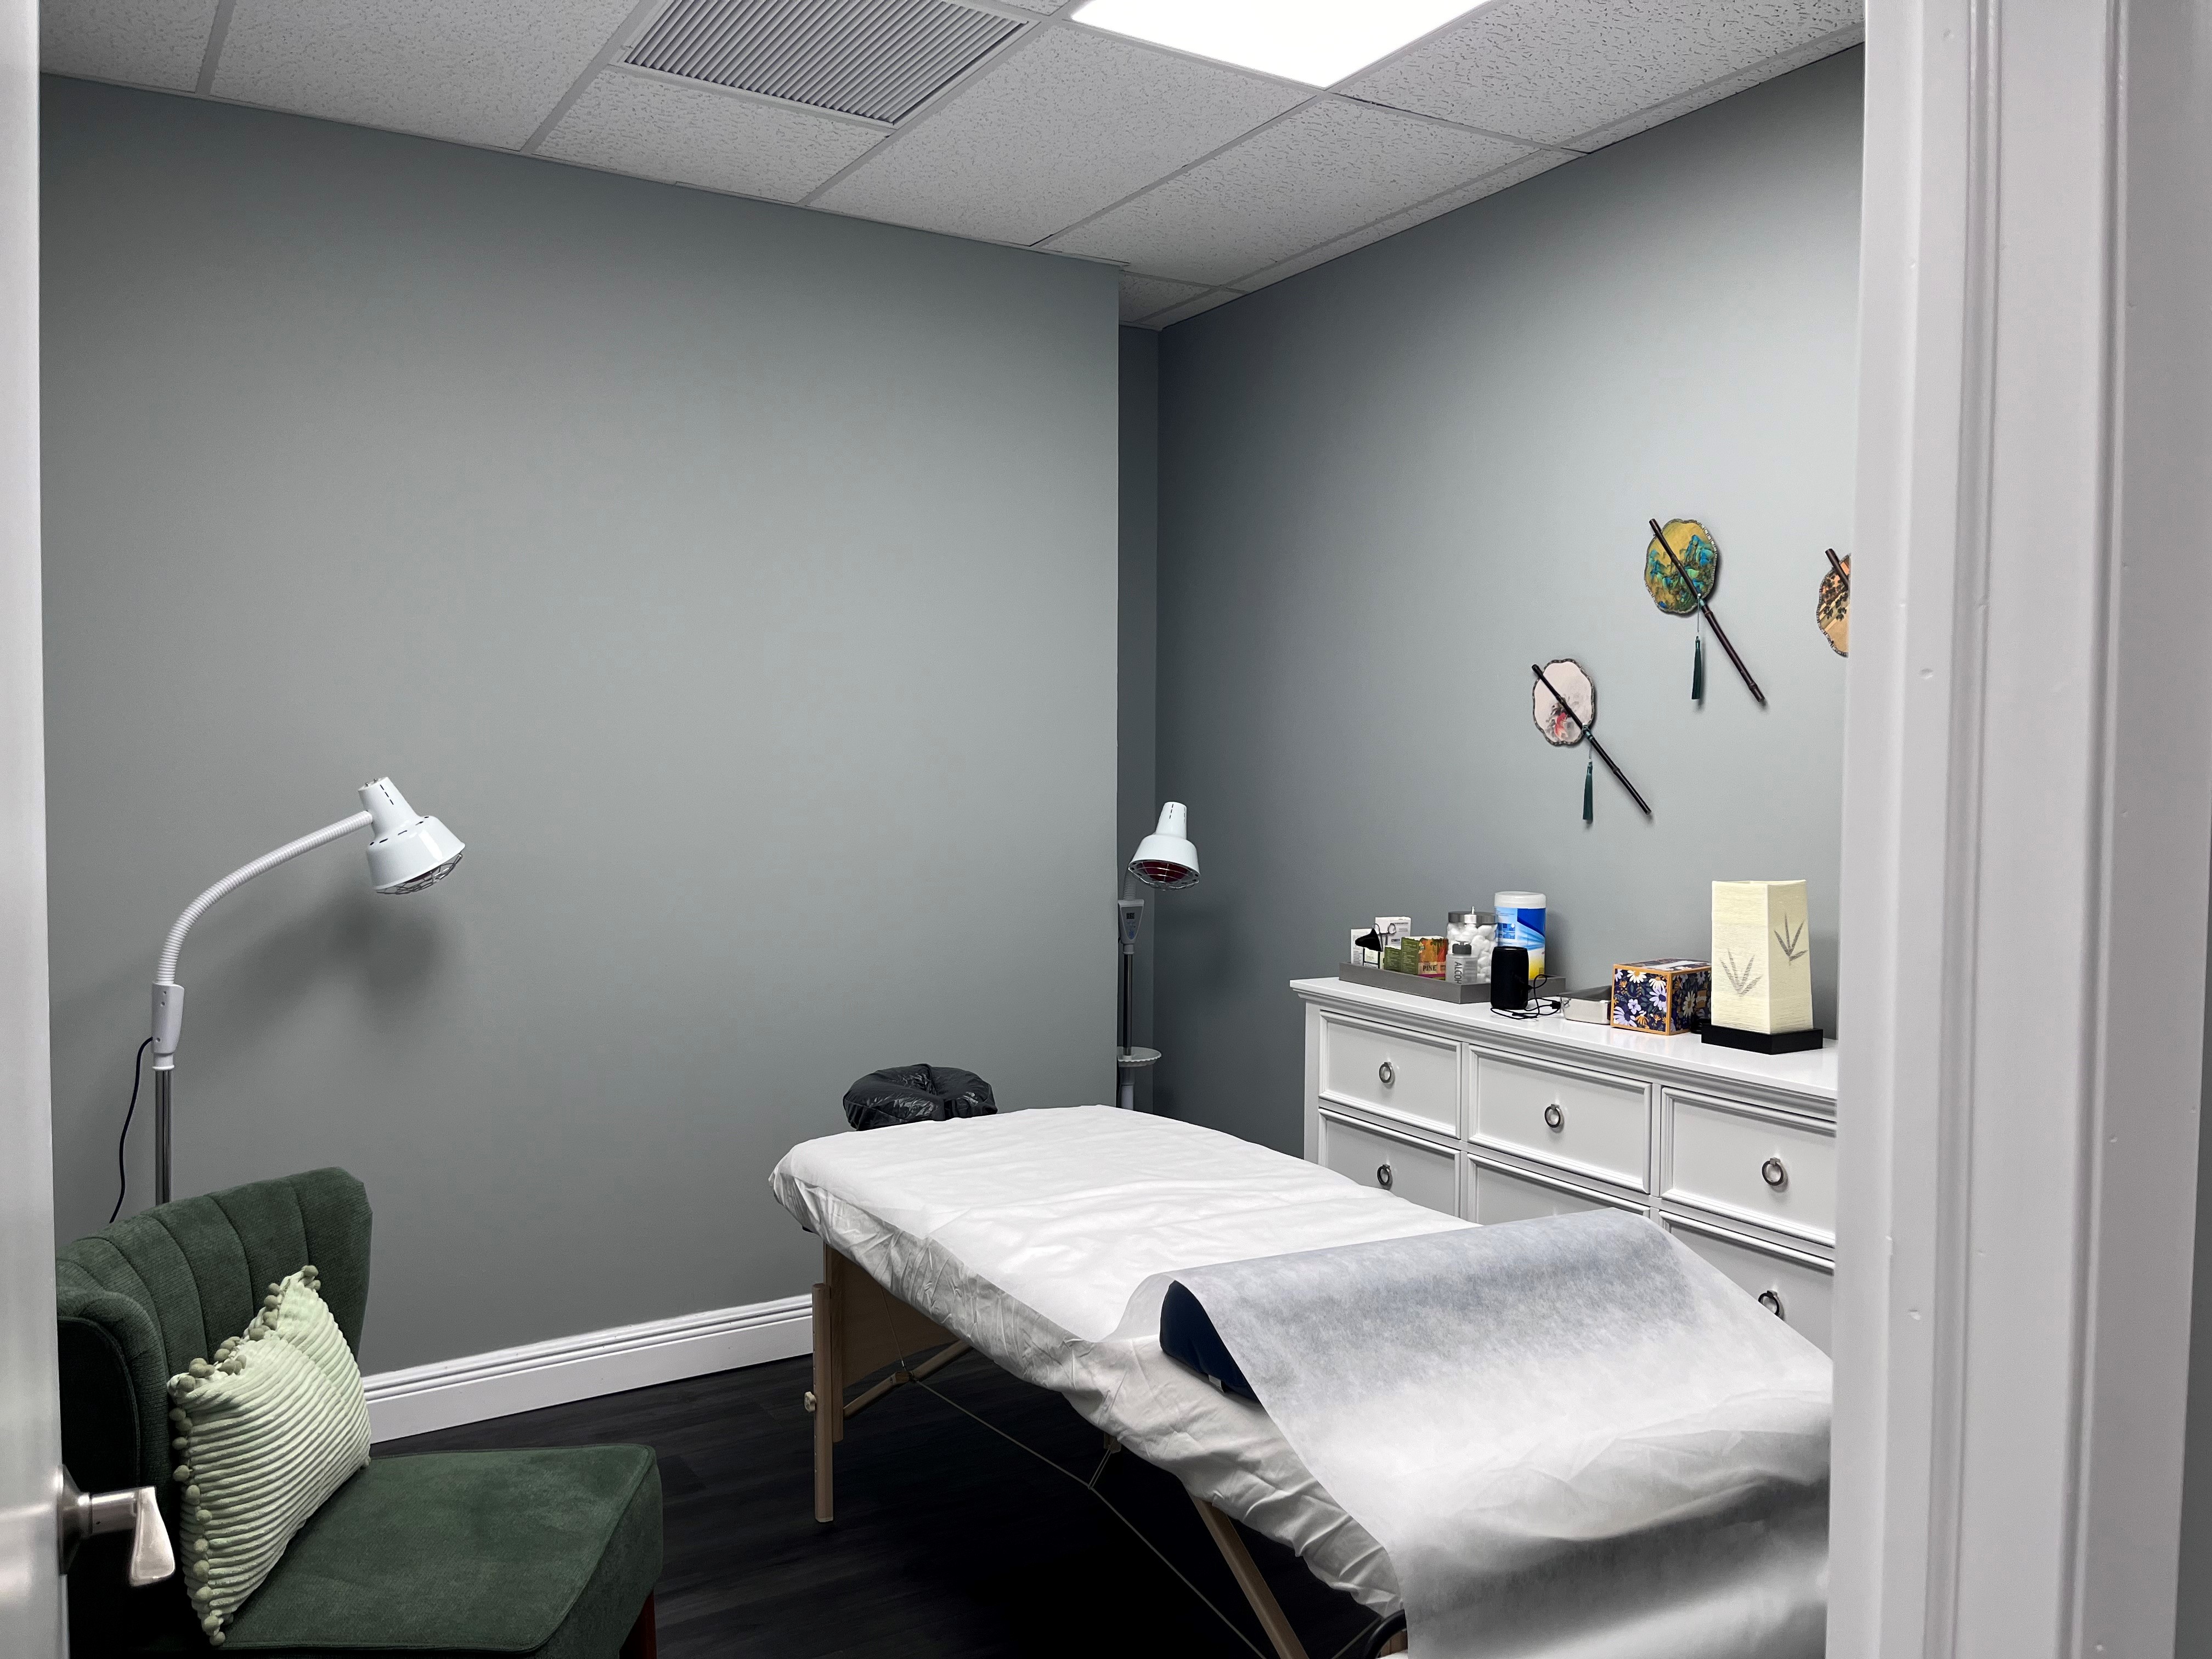 Team Acupuncture Boca Raton Office - Treatment Room 1